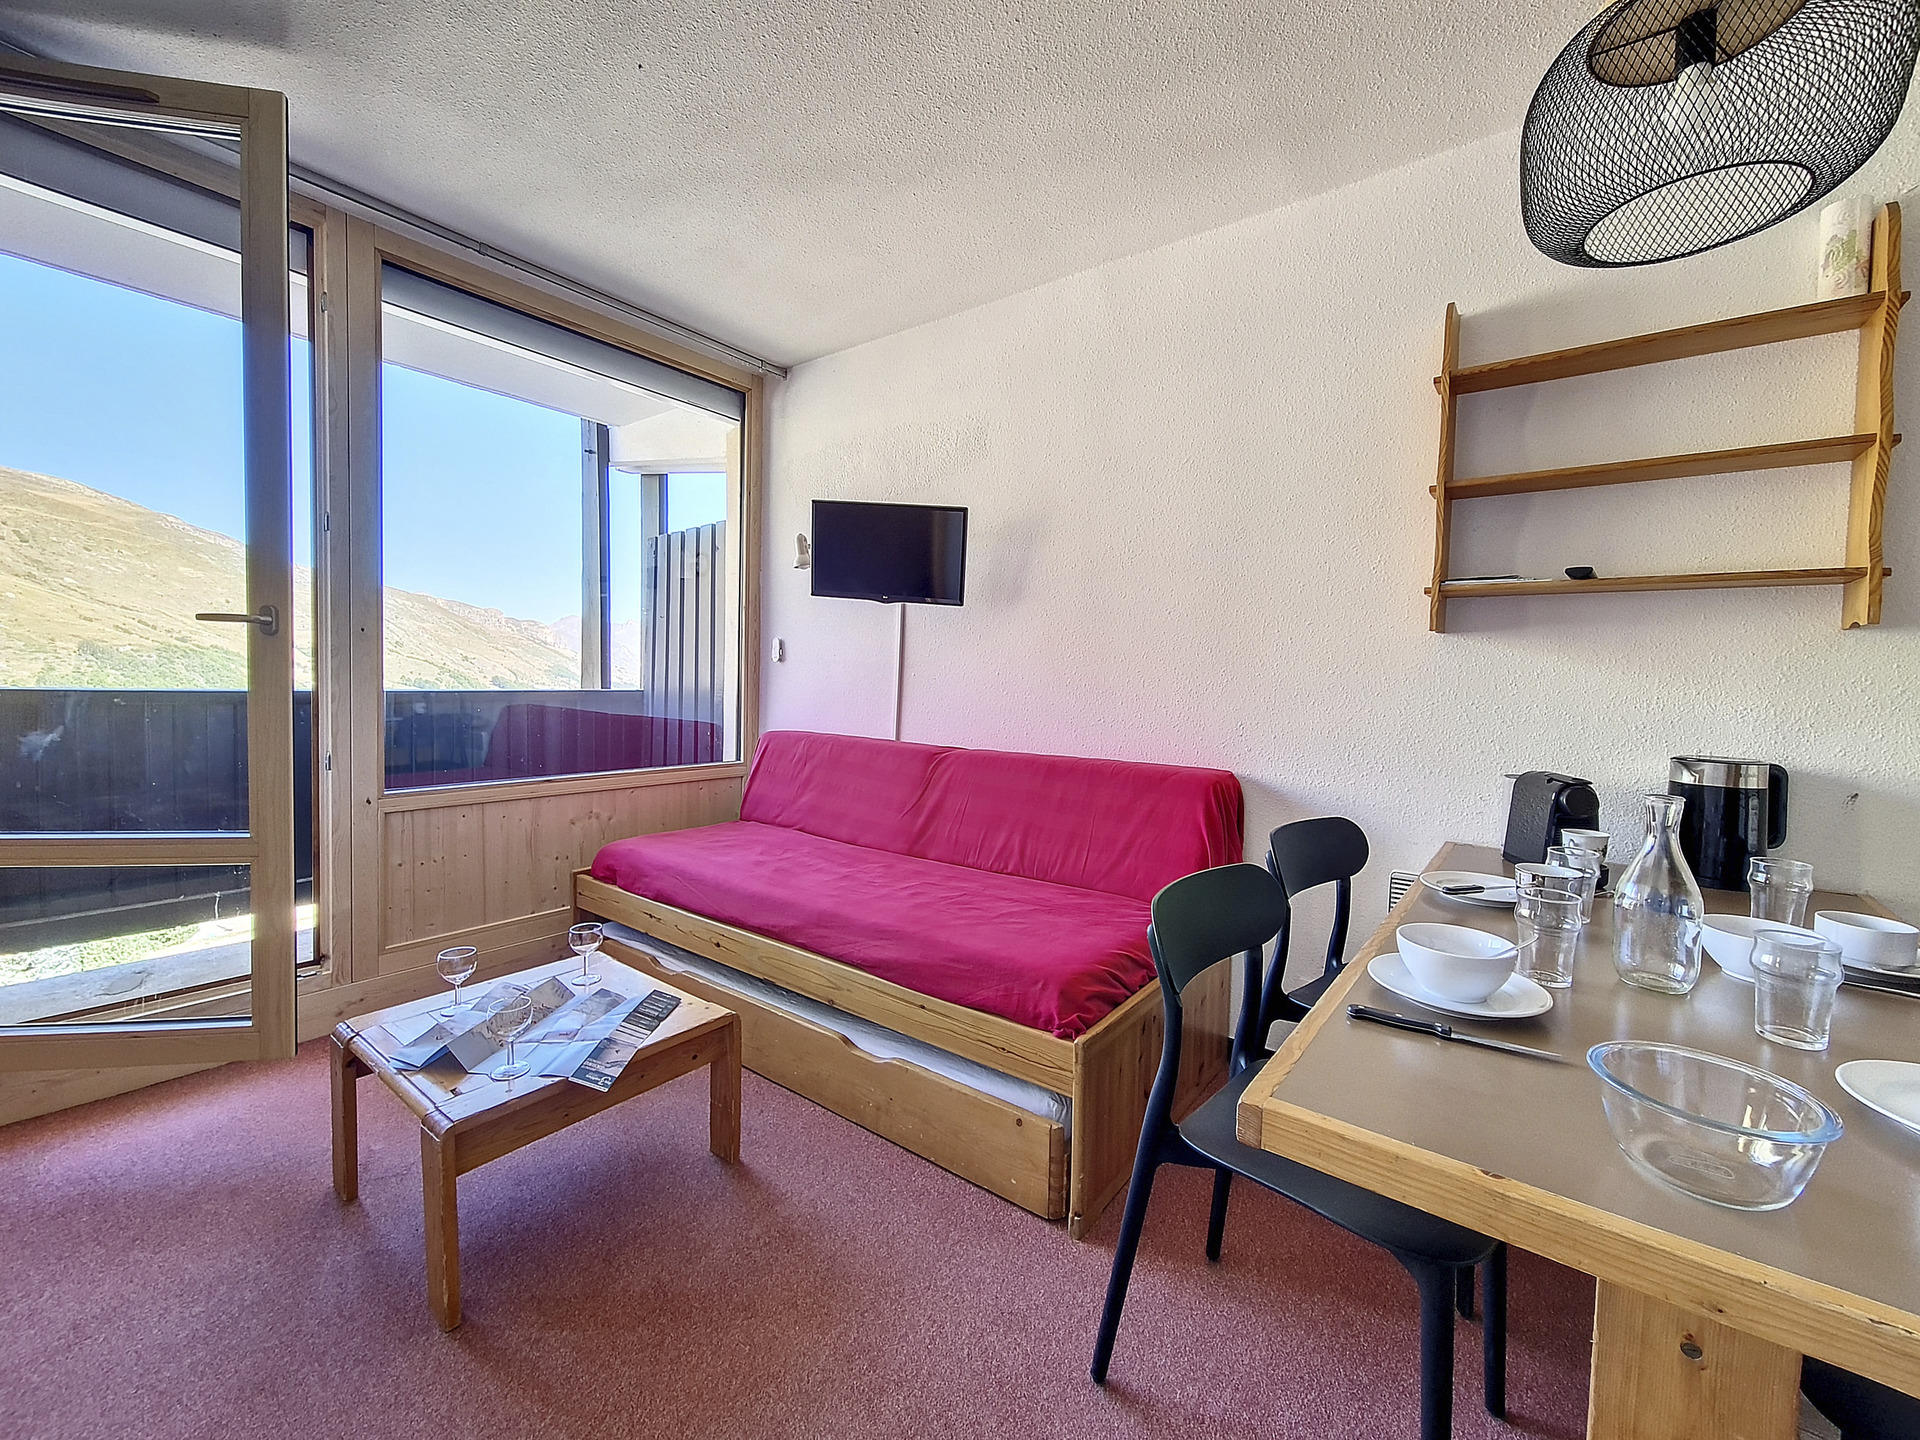 2 rooms 4 people - travelski home choice - Apartements VILLARET - Les Menuires Preyerand